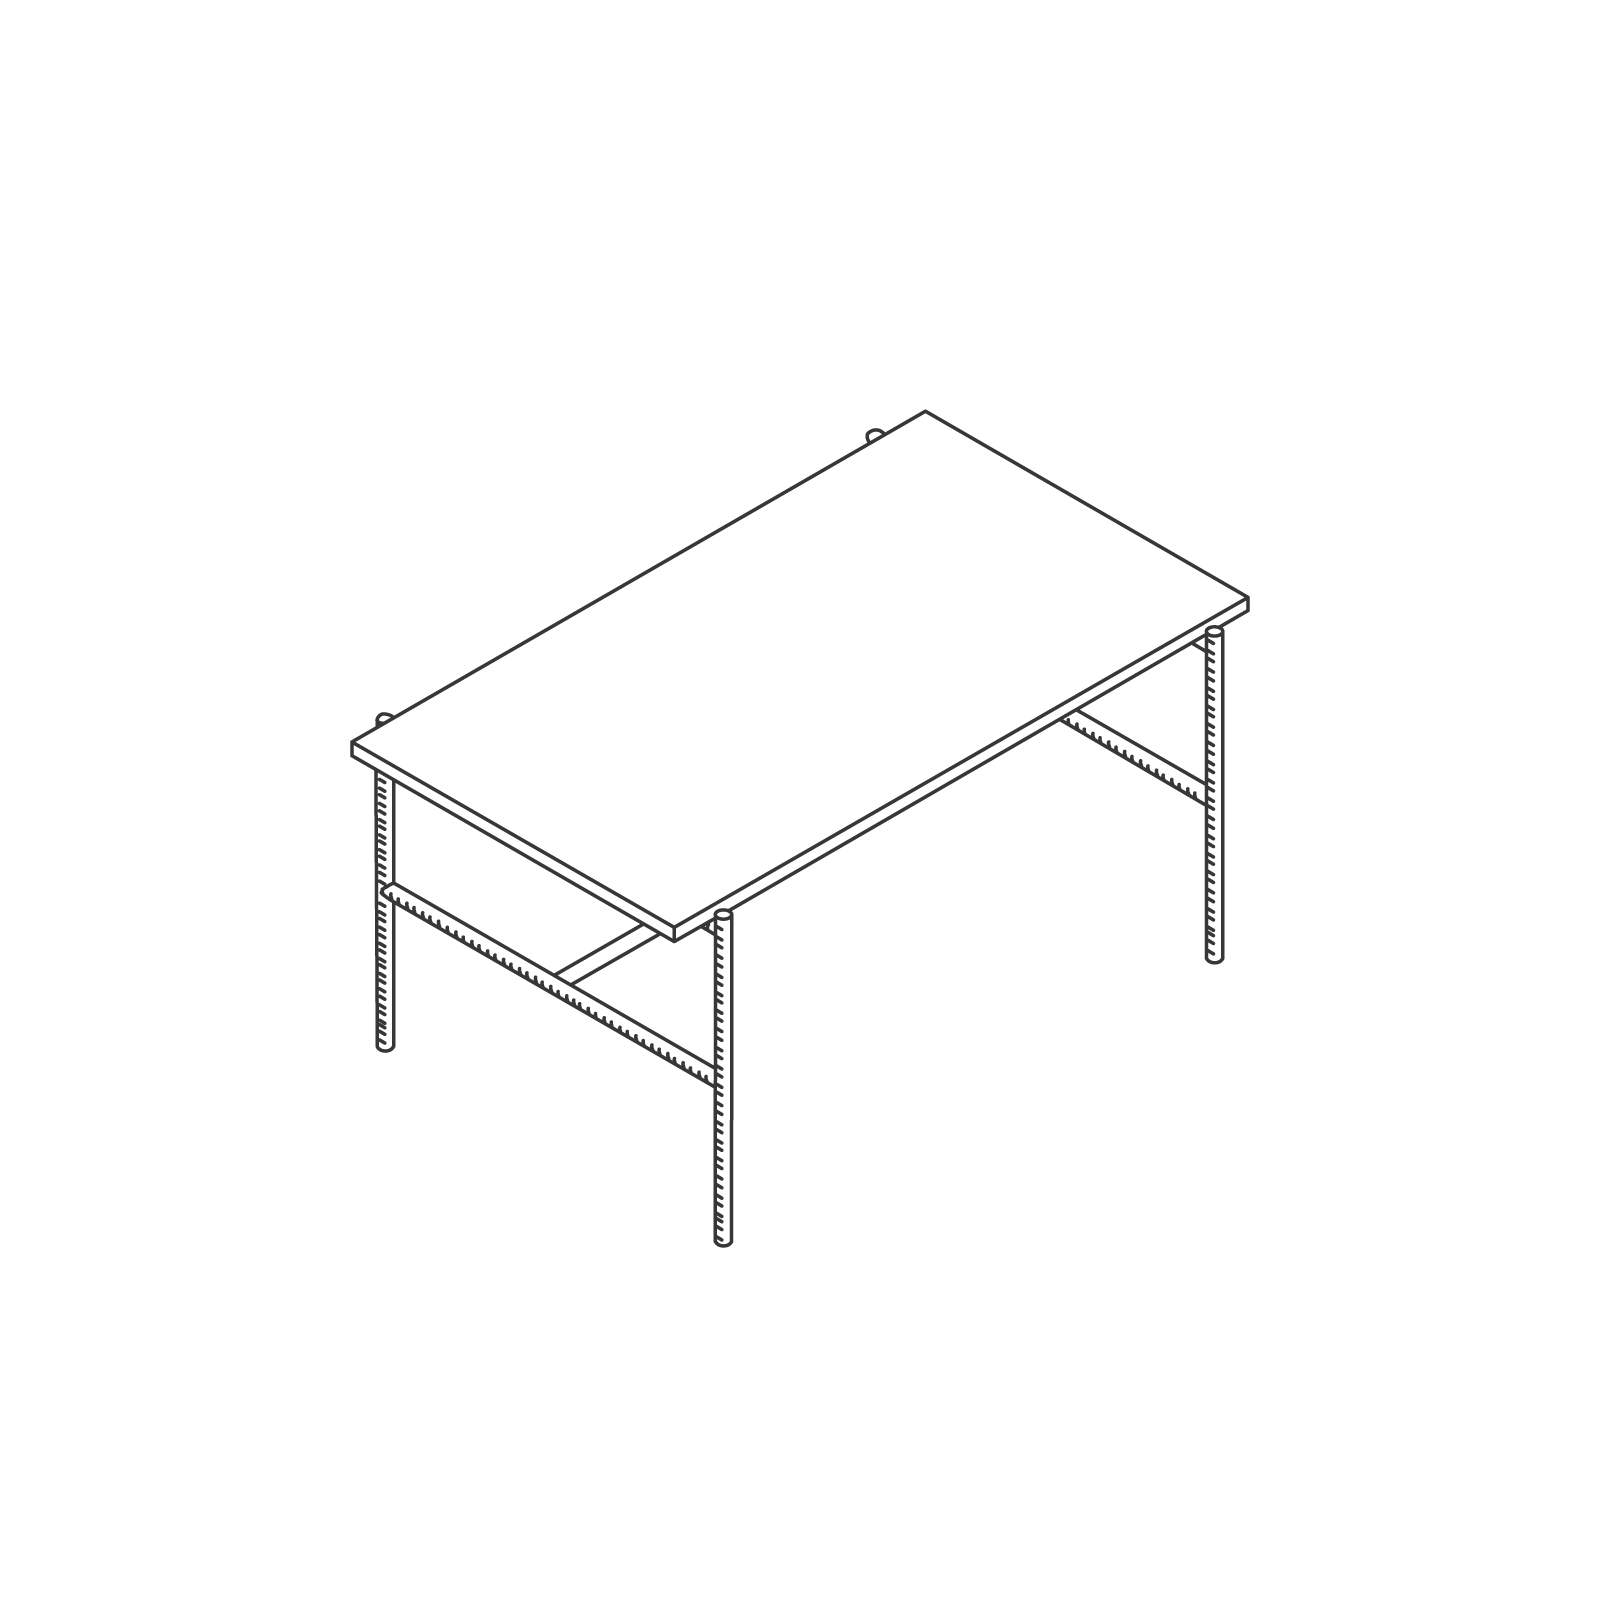 A line drawing - Rebar Coffee Table